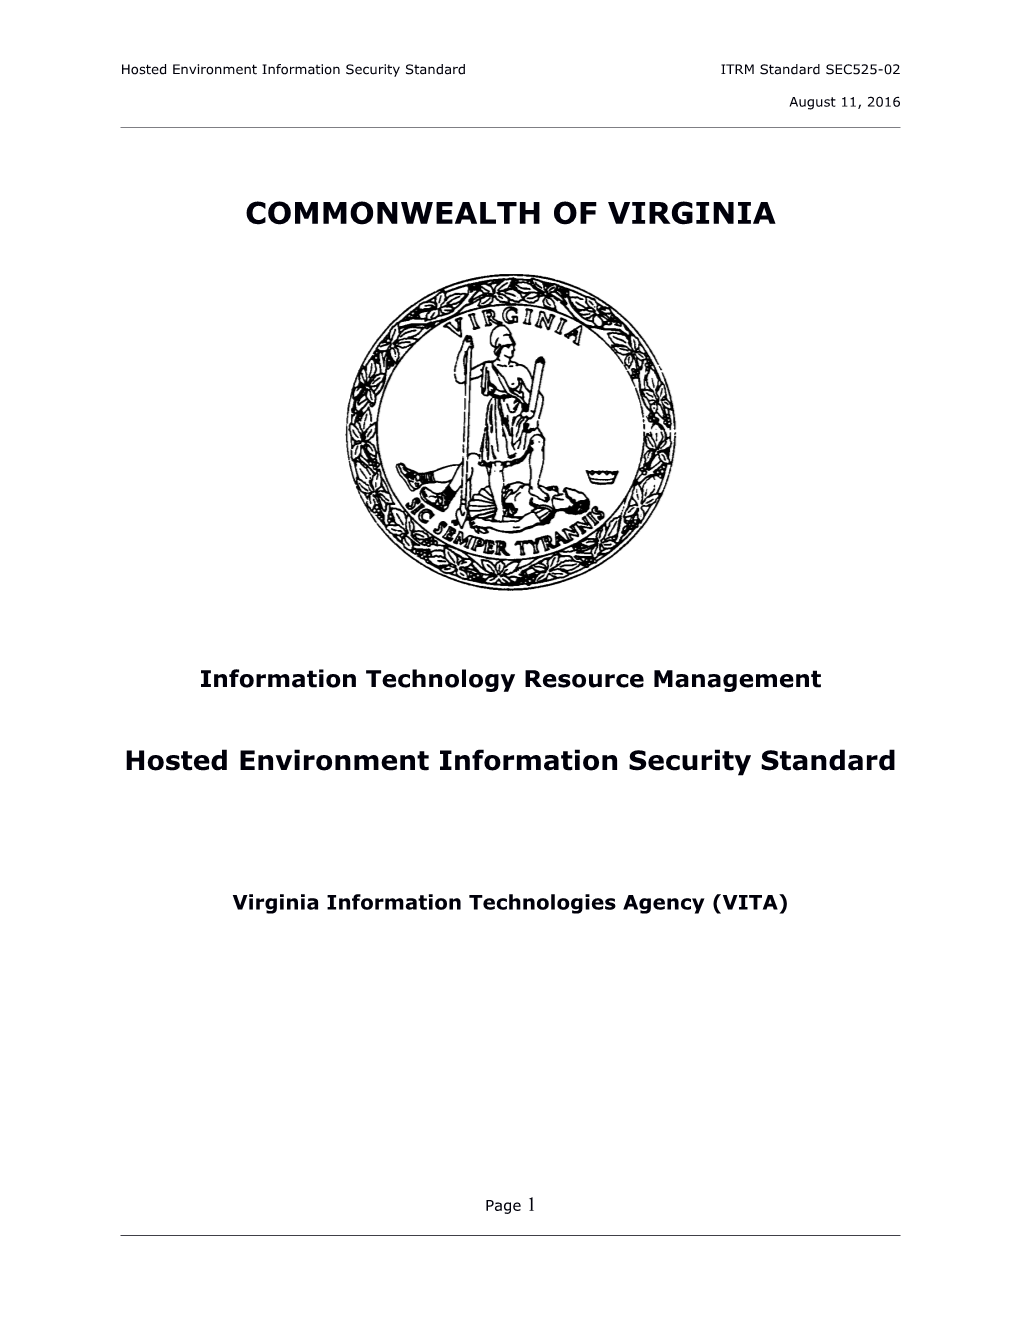 Information Security Standard